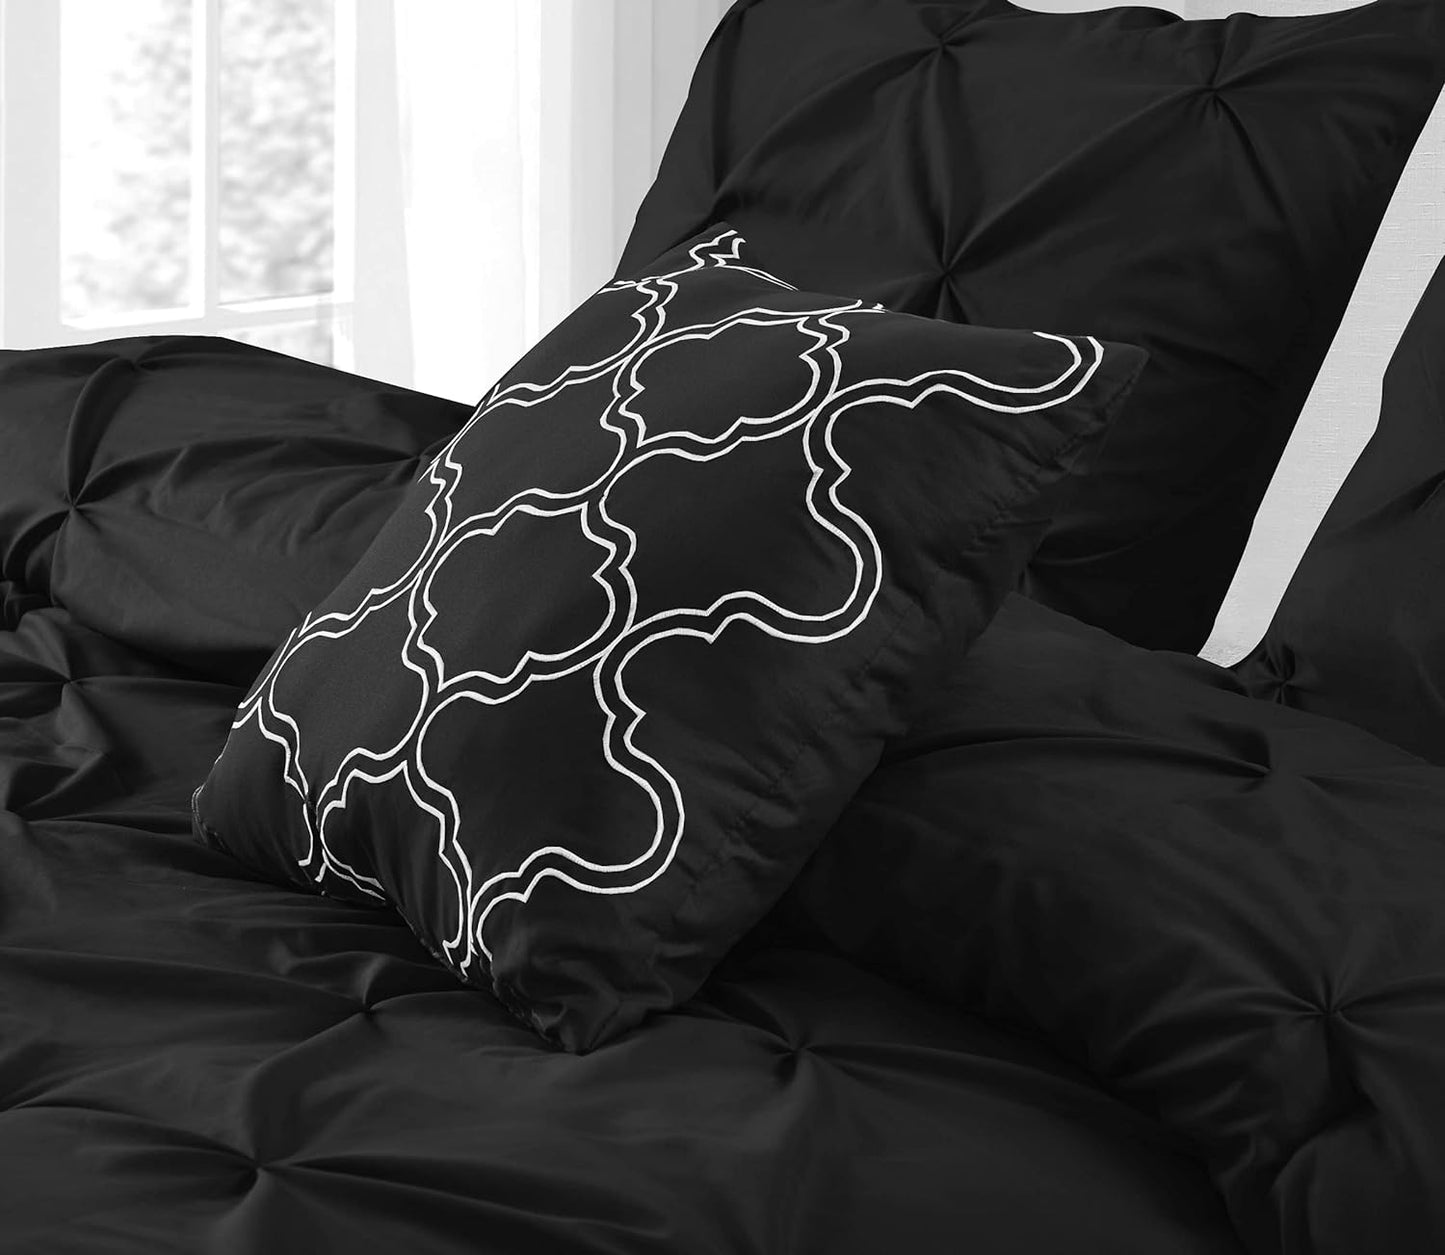 Black Pinch Pleated 4 Piece Bedding Comforter Set